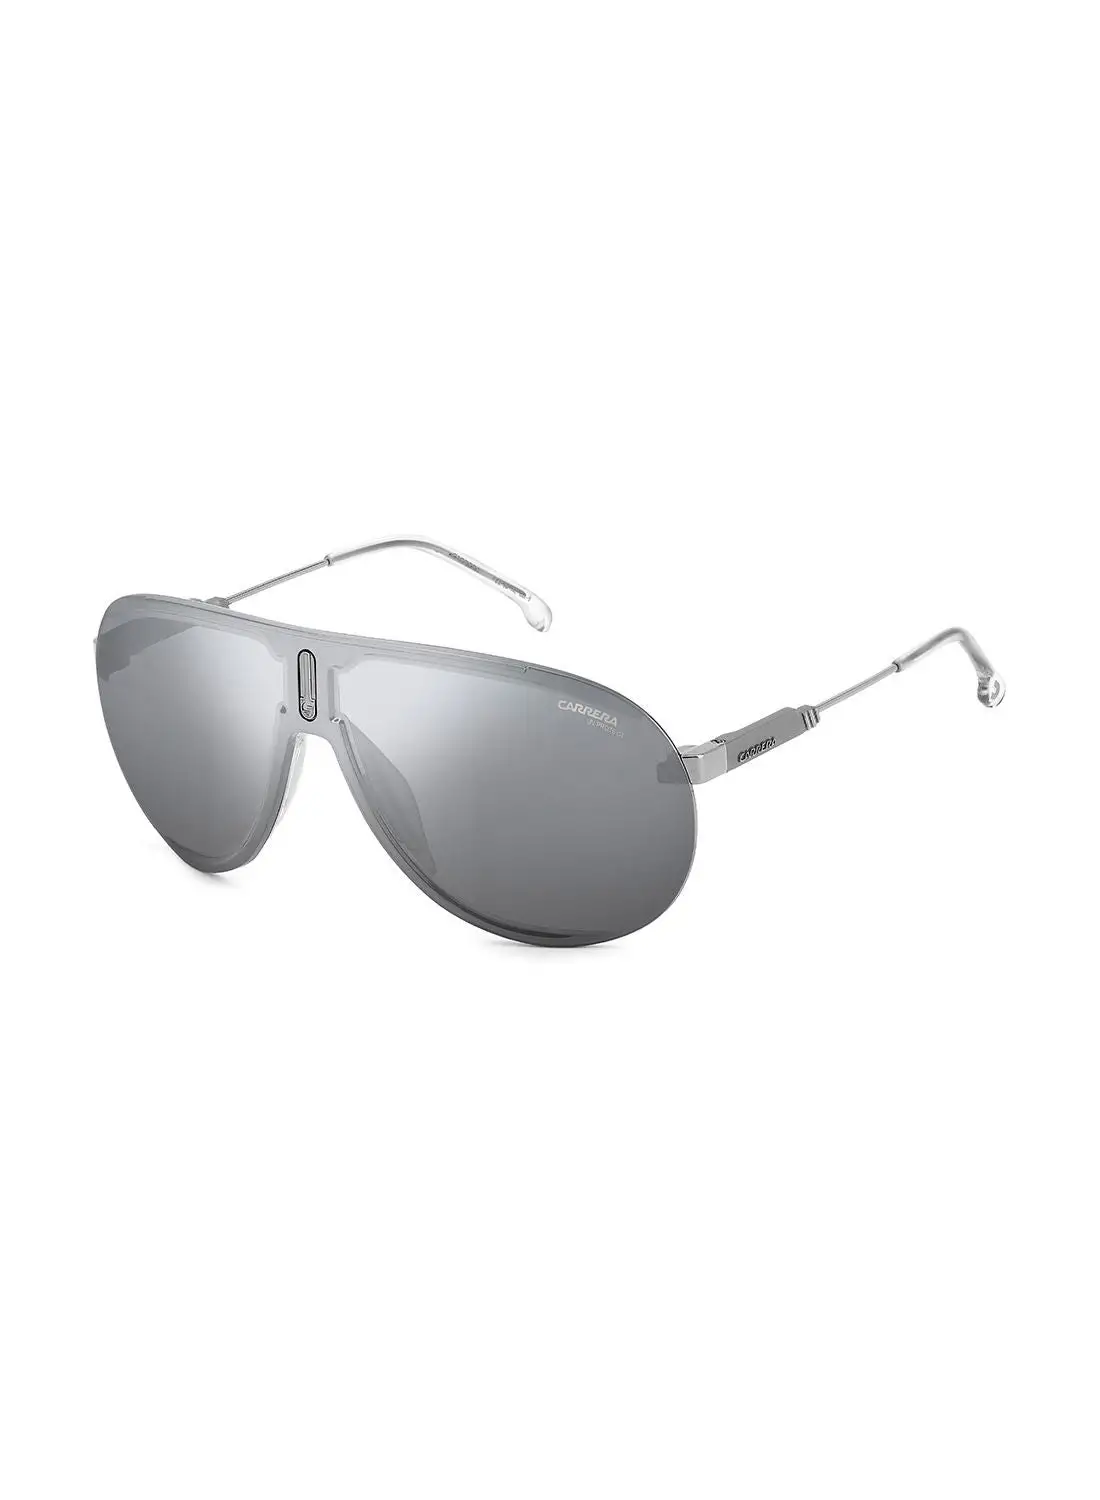 Carrera Unisex UV Protection Pilot Sunglasses - Superchampion Ruthenium 99 - Lens Size: 99 Mm